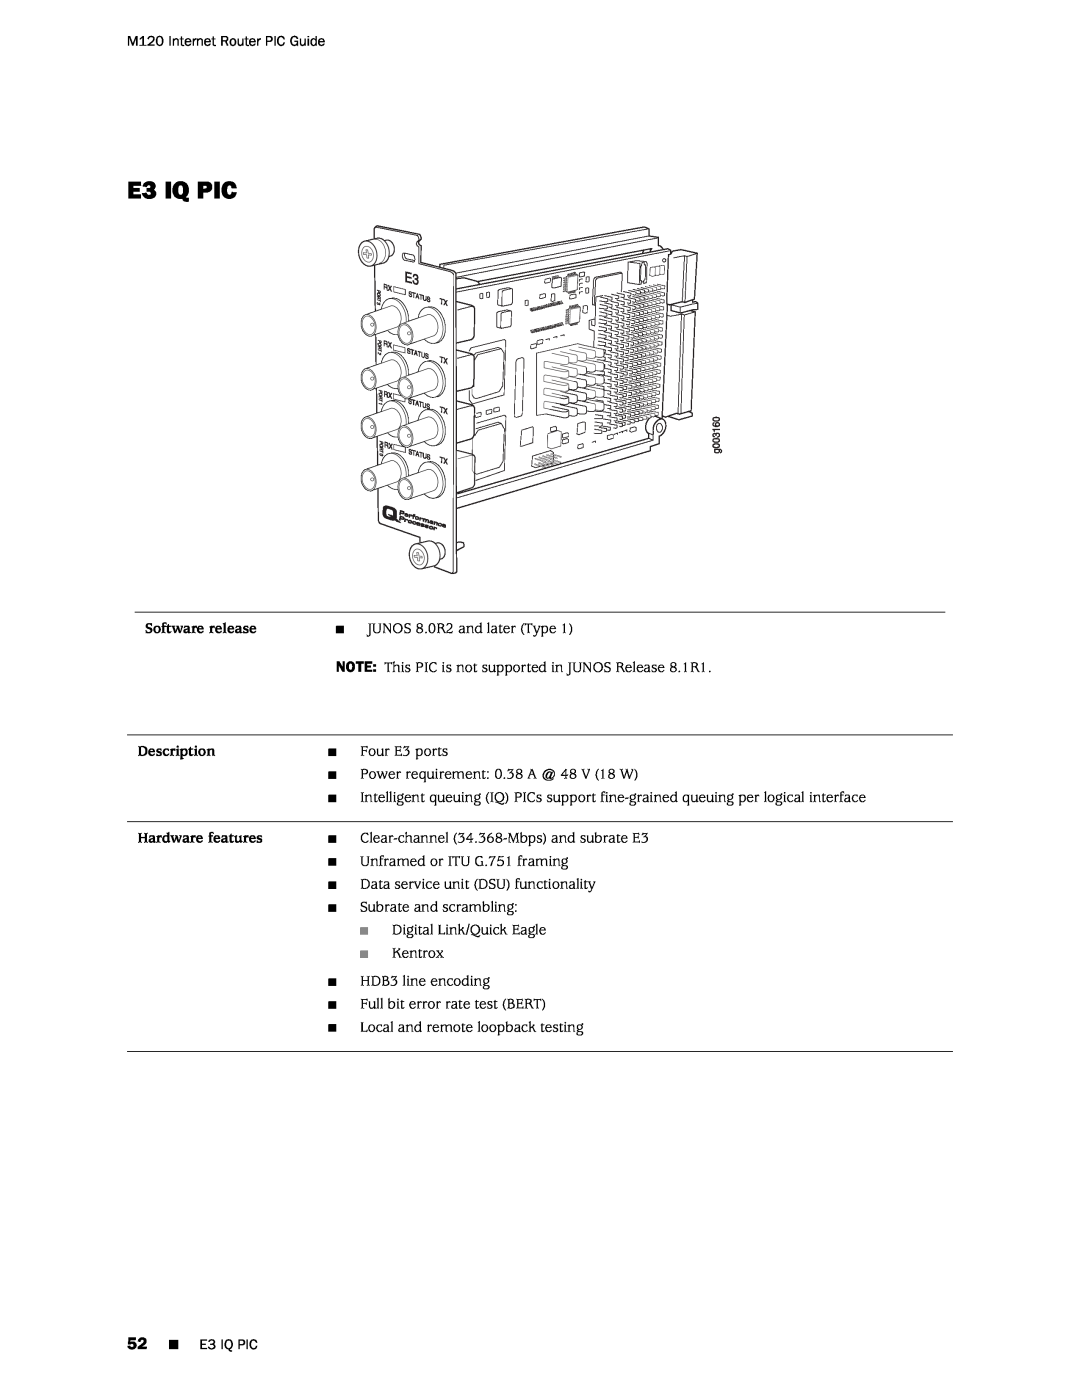 Juniper Networks M120 manual E3 IQ PIC, Software release, Description, Hardware features 